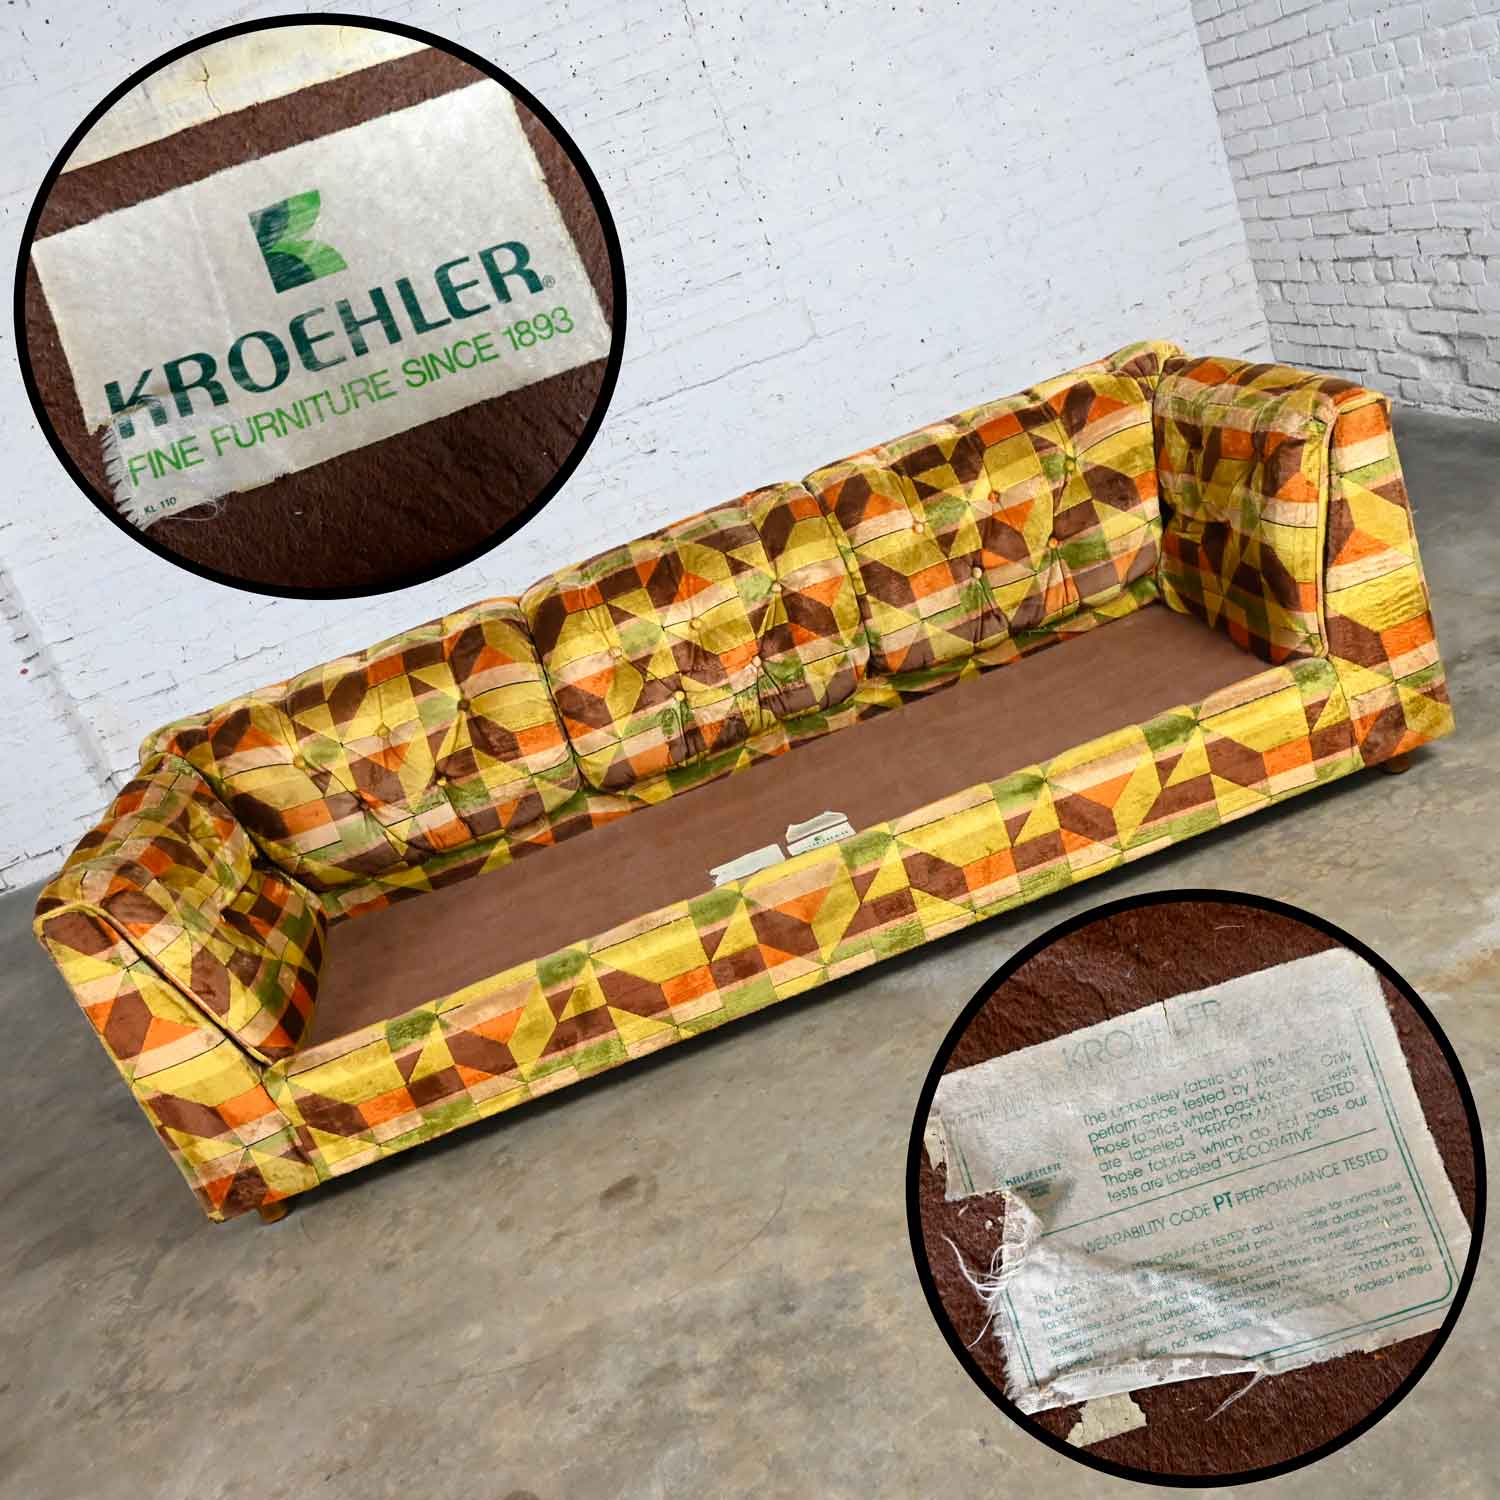 Vintage Modern Kroehler Multi Color Geometric Pattern Tufted Tuxedo Style Sofa